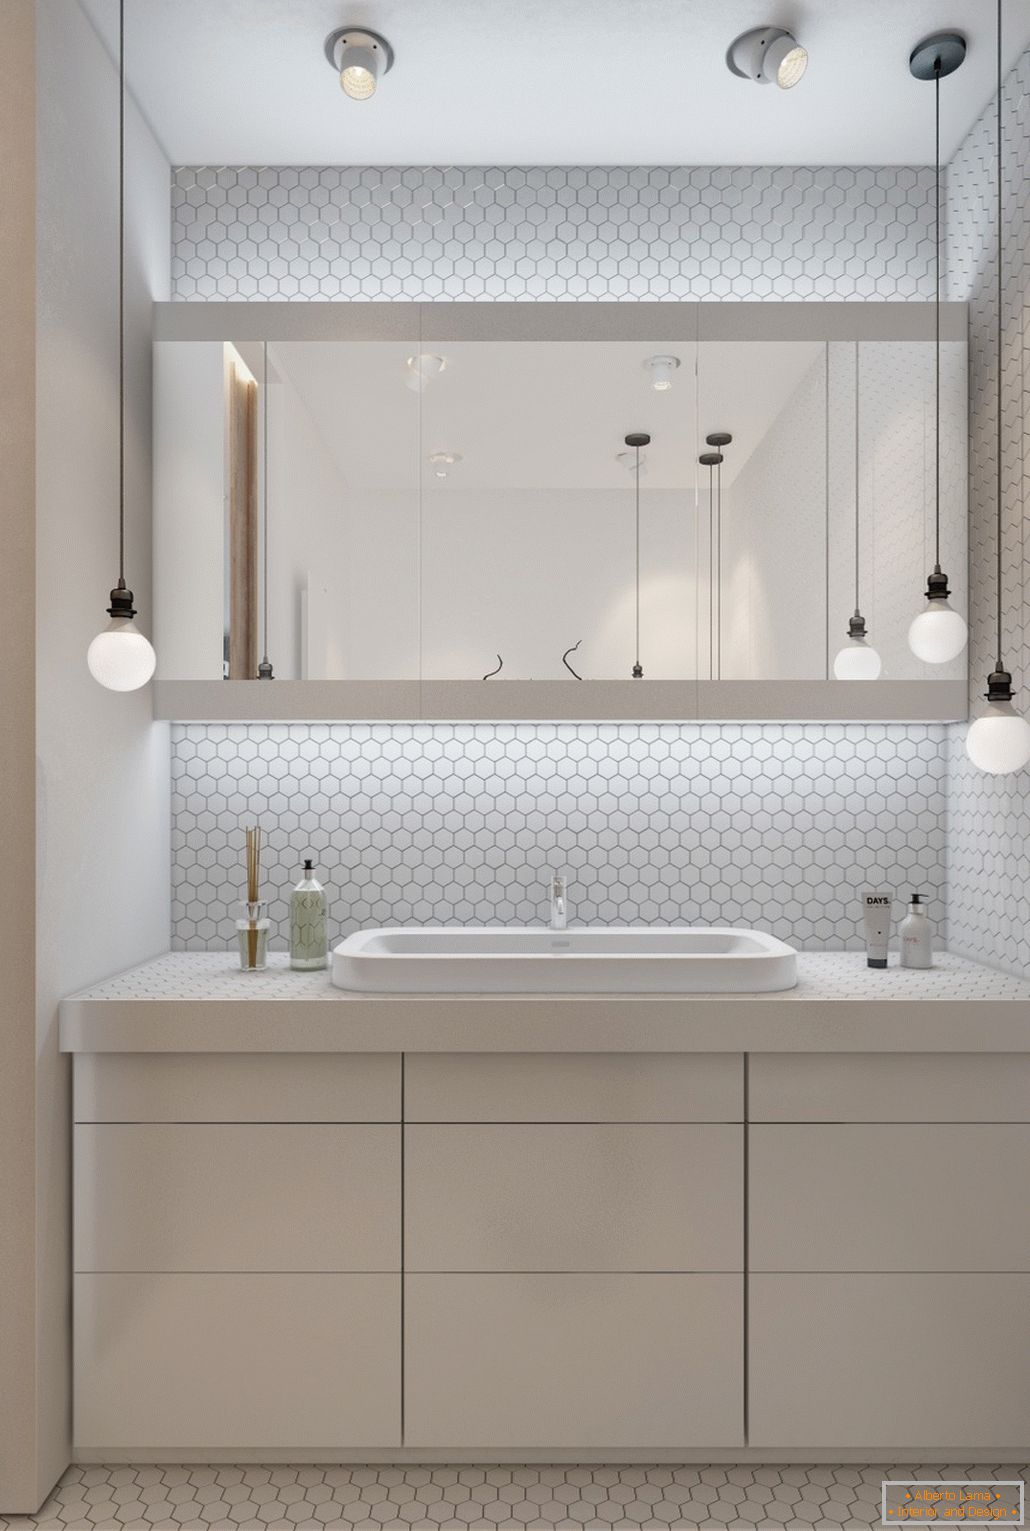 Design a white bathroom for a small apartment - фото 3